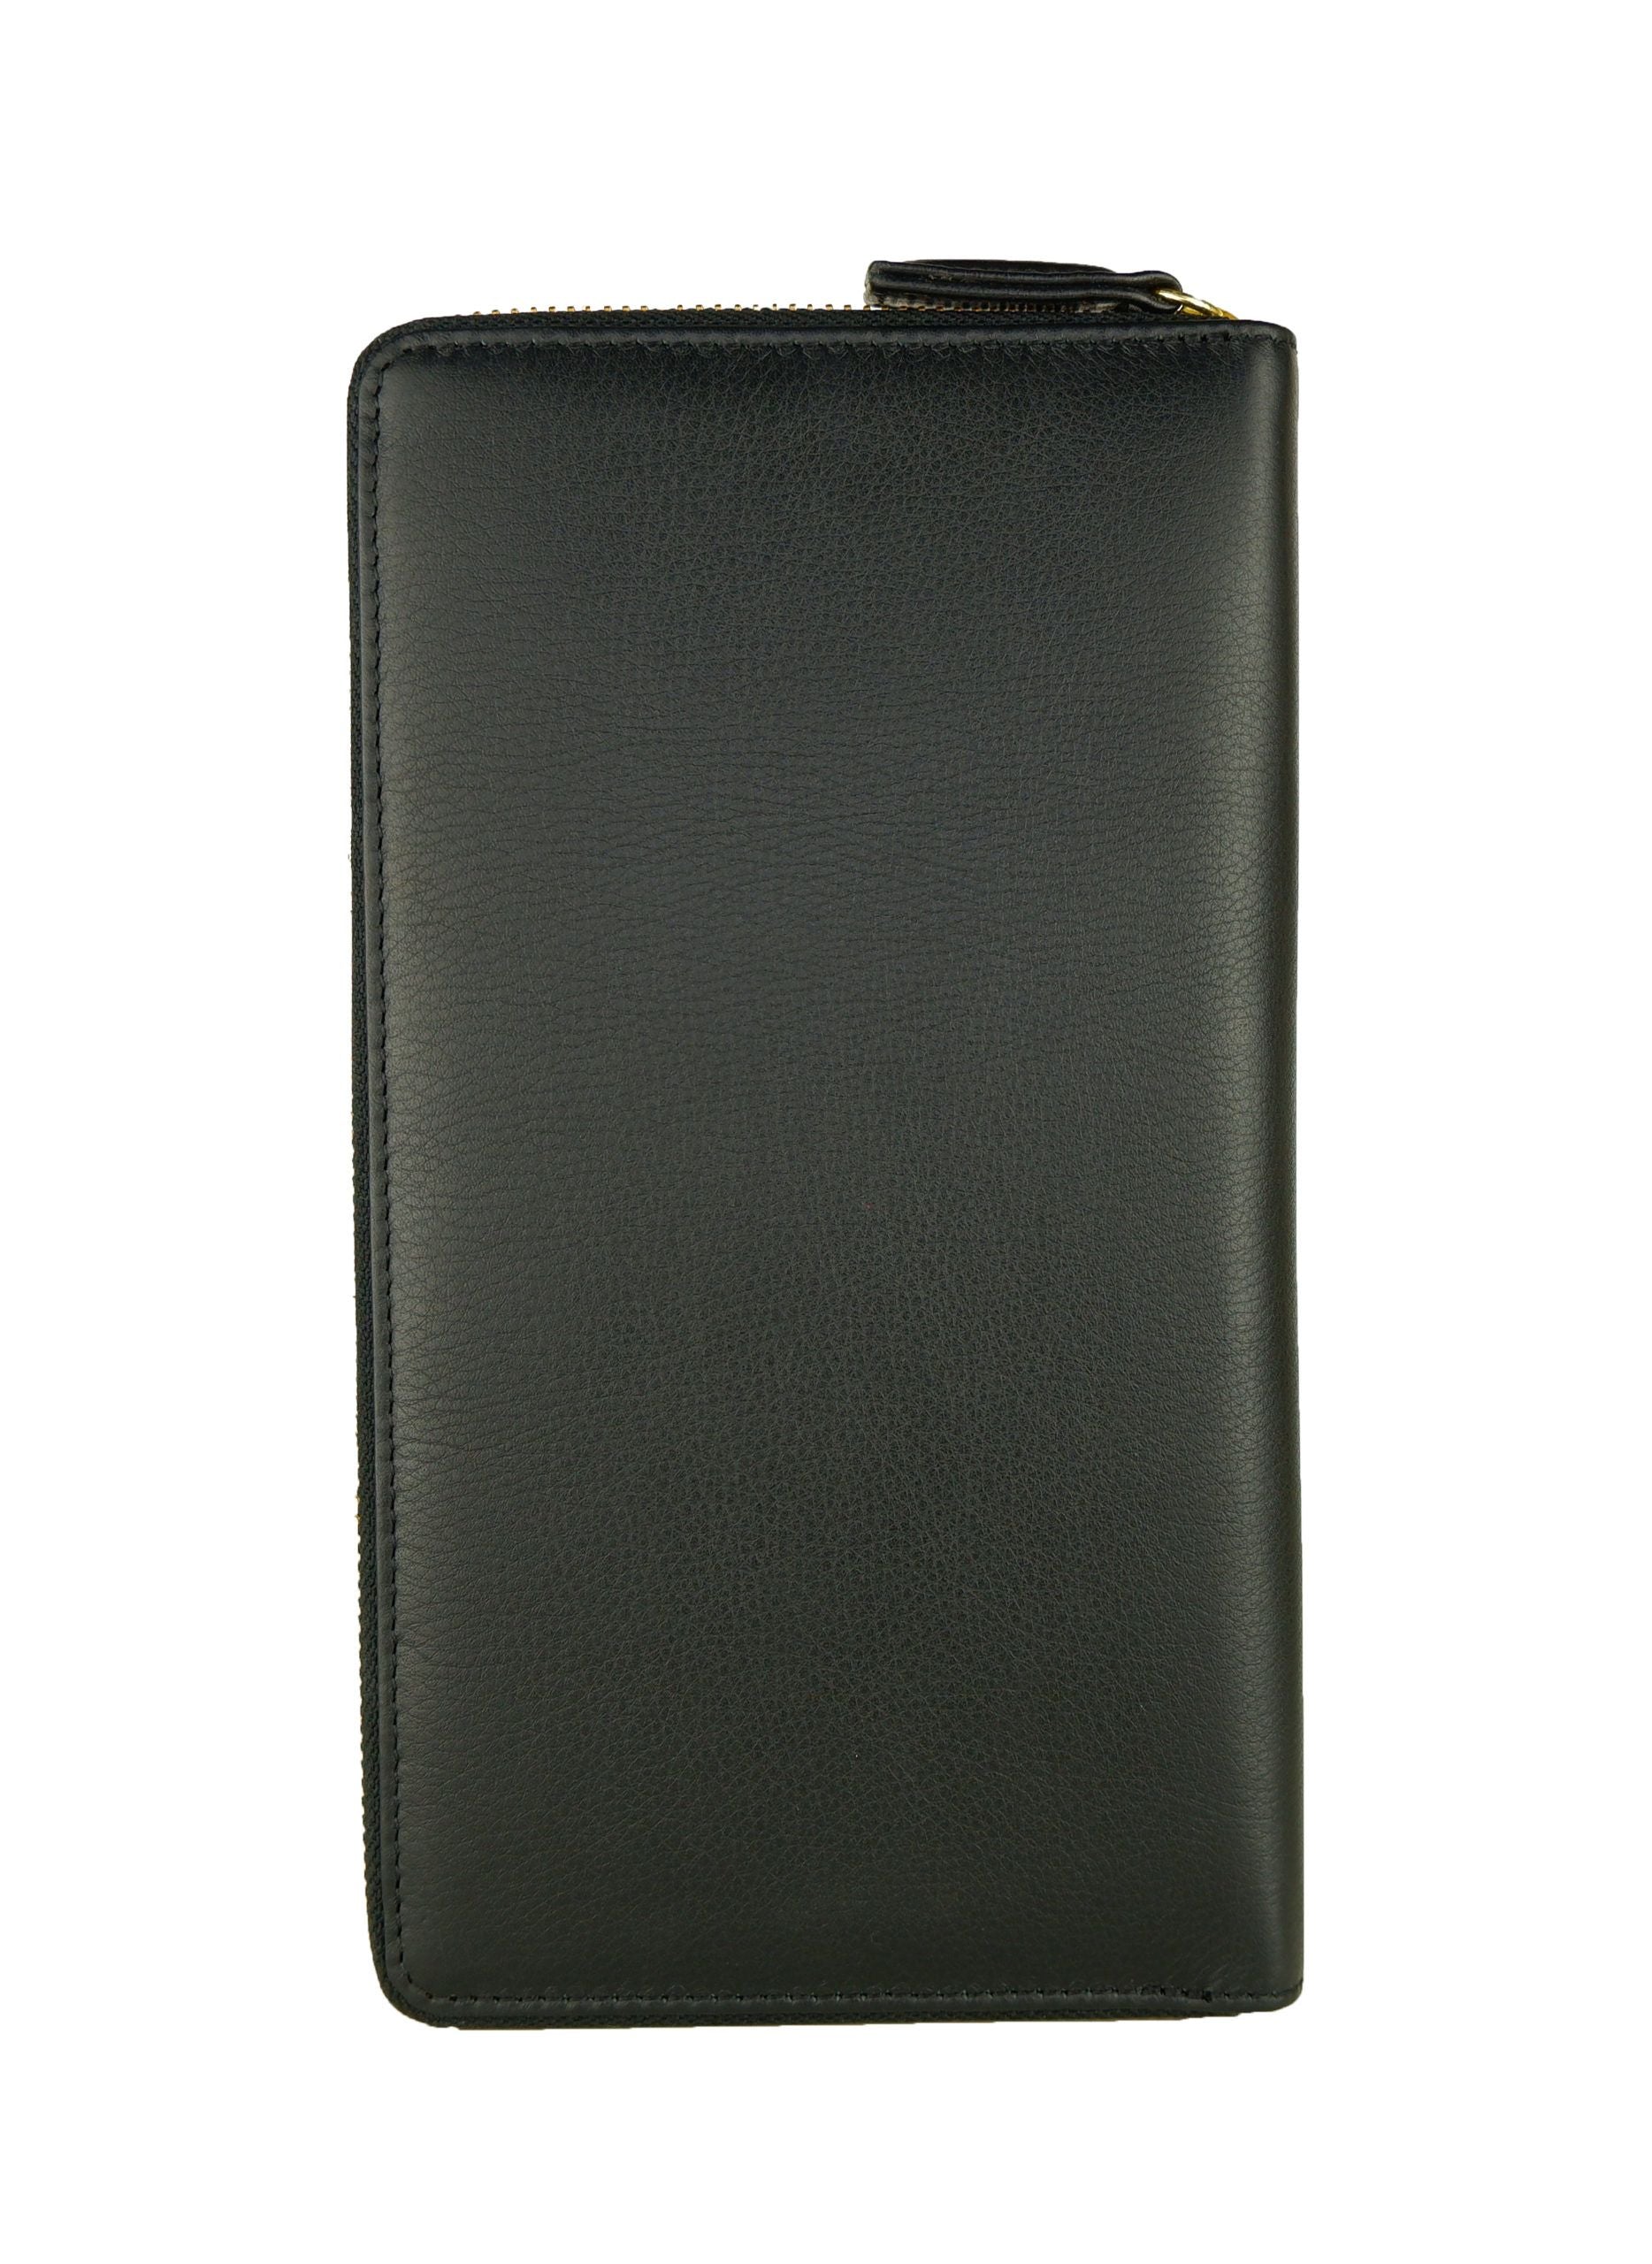 Cavalli Class Black Leather Wallet